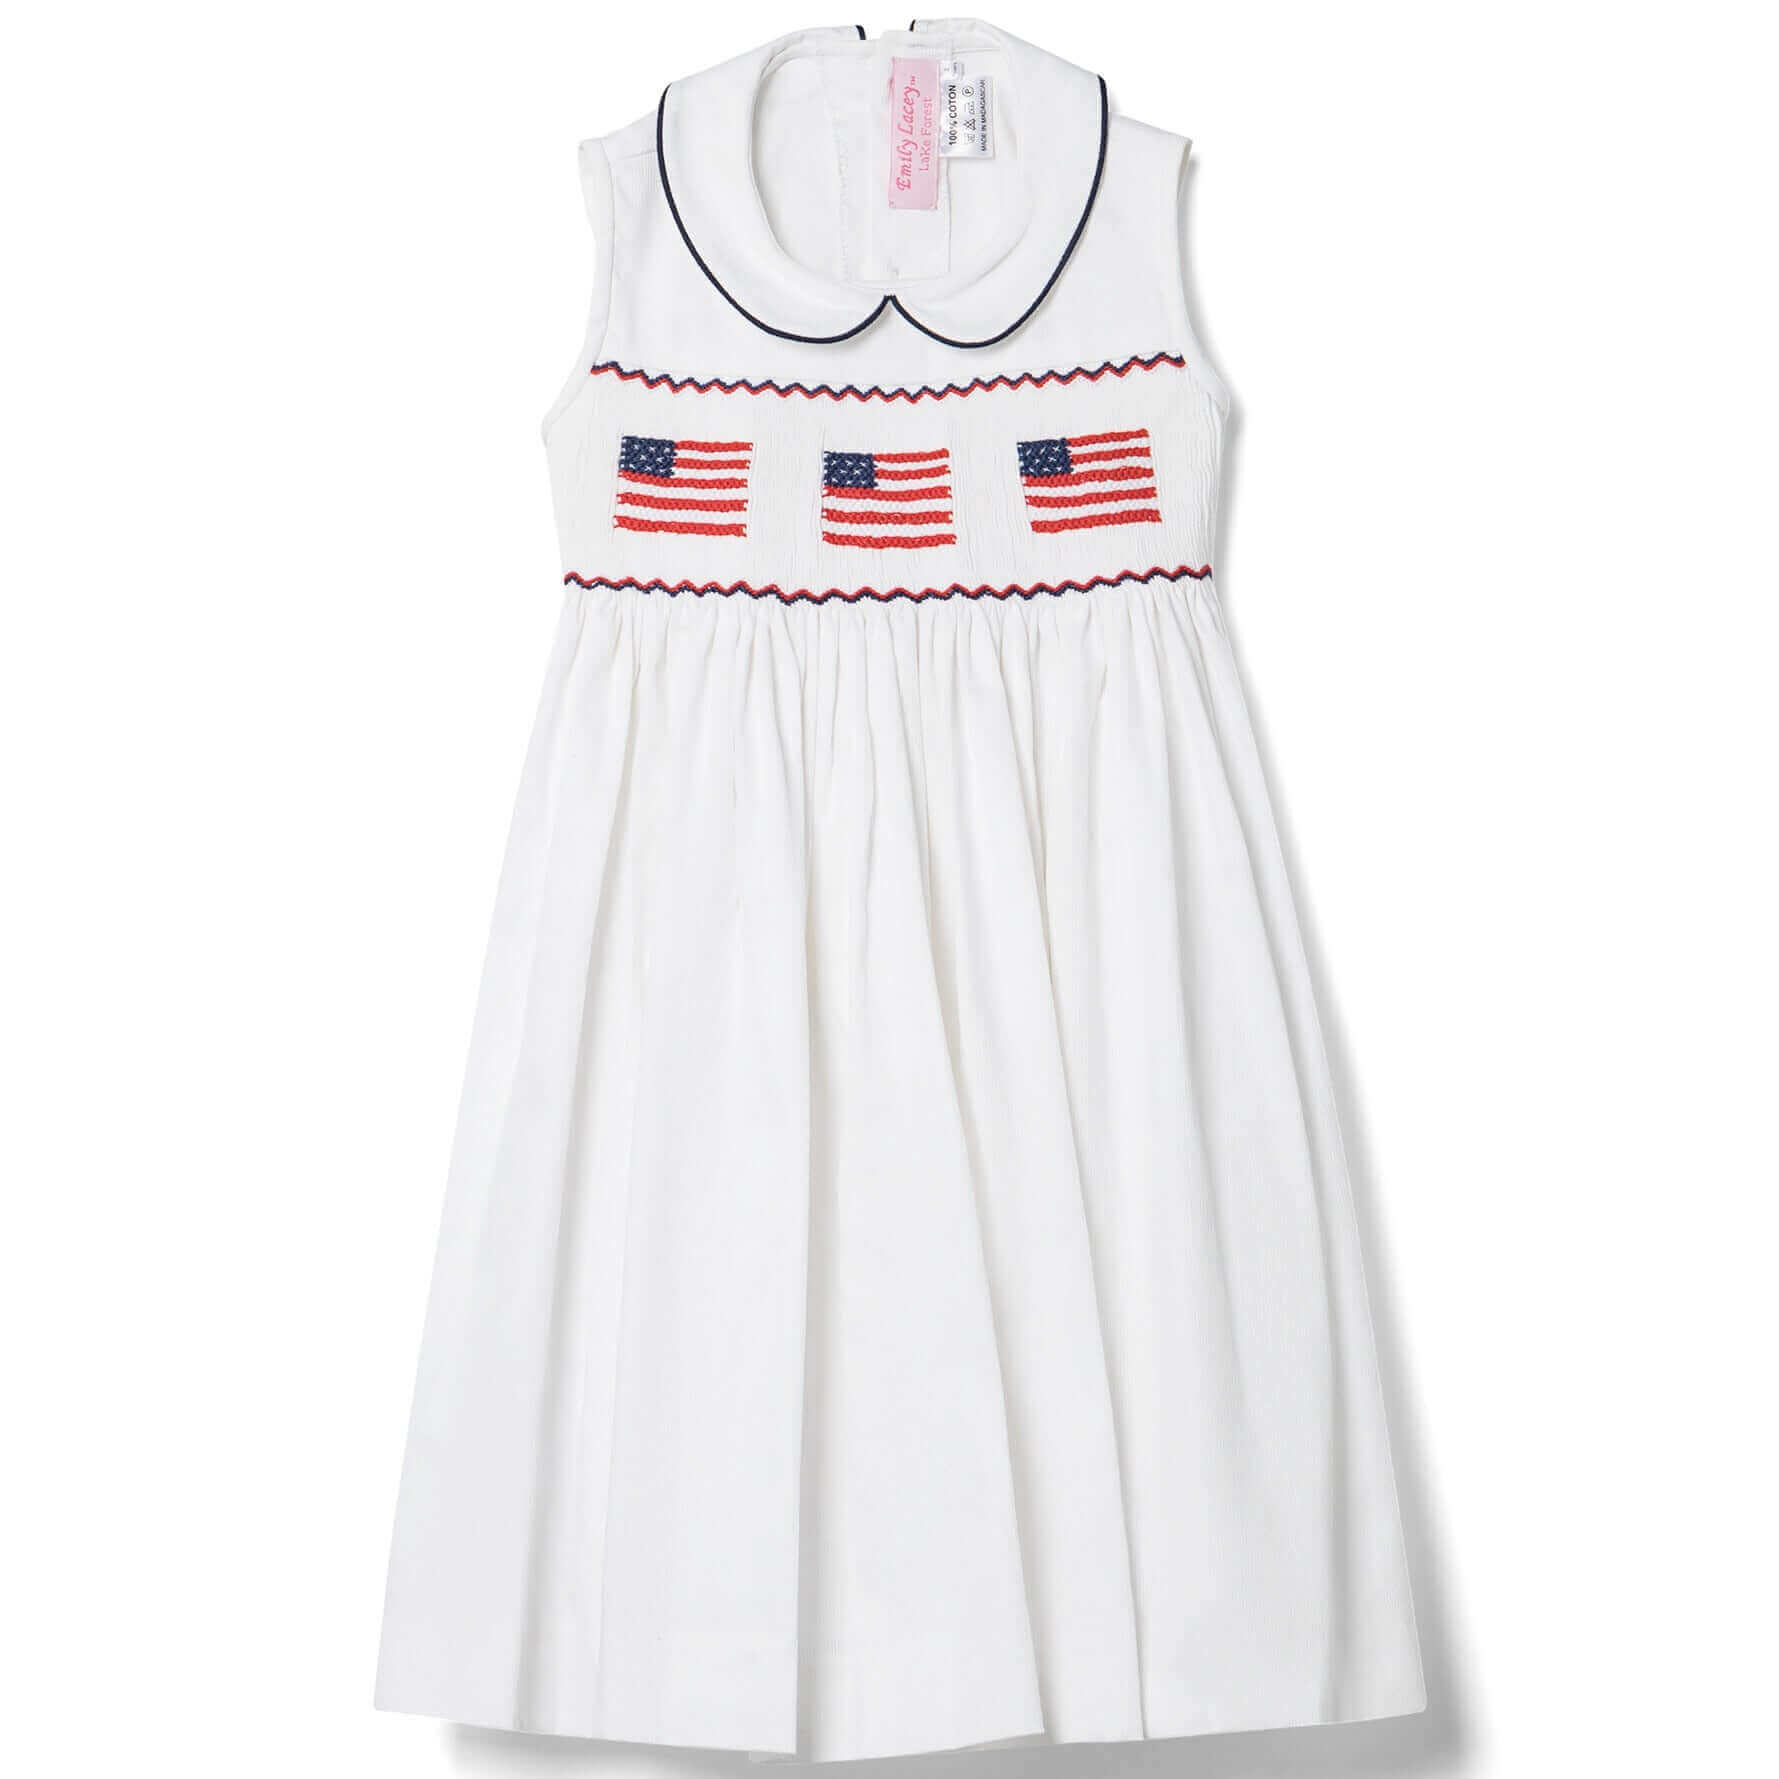 Dresses - Smocked American Flag Dress